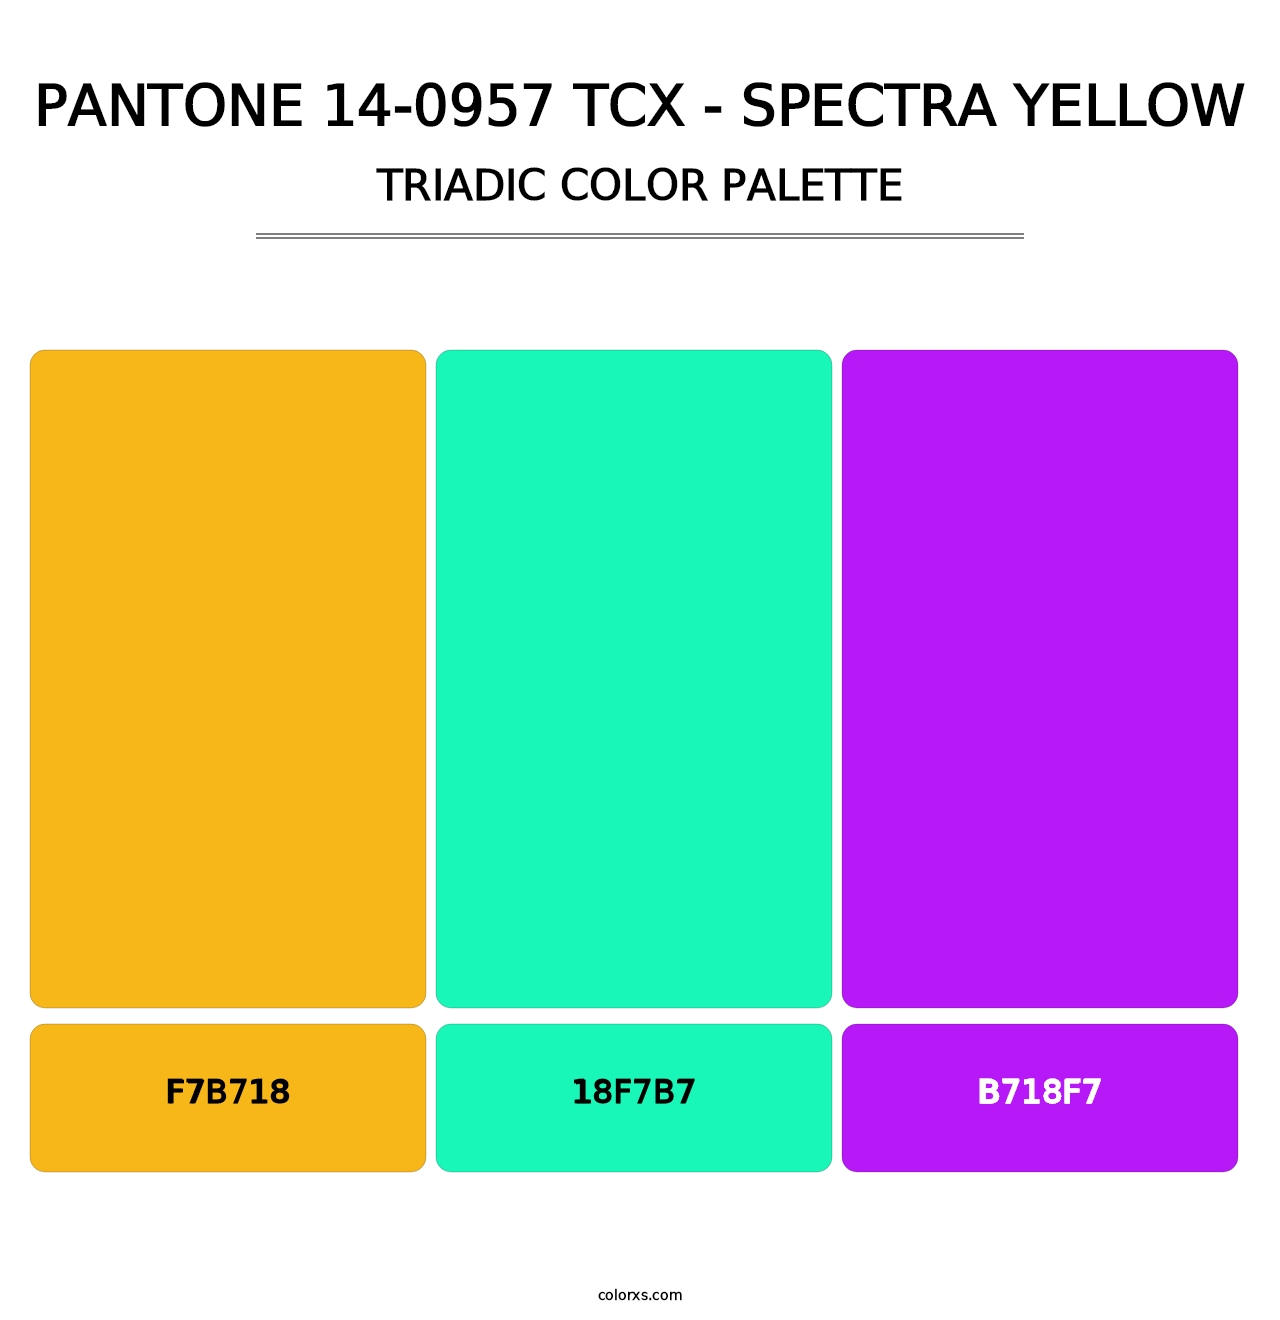 PANTONE 14-0957 TCX - Spectra Yellow - Triadic Color Palette